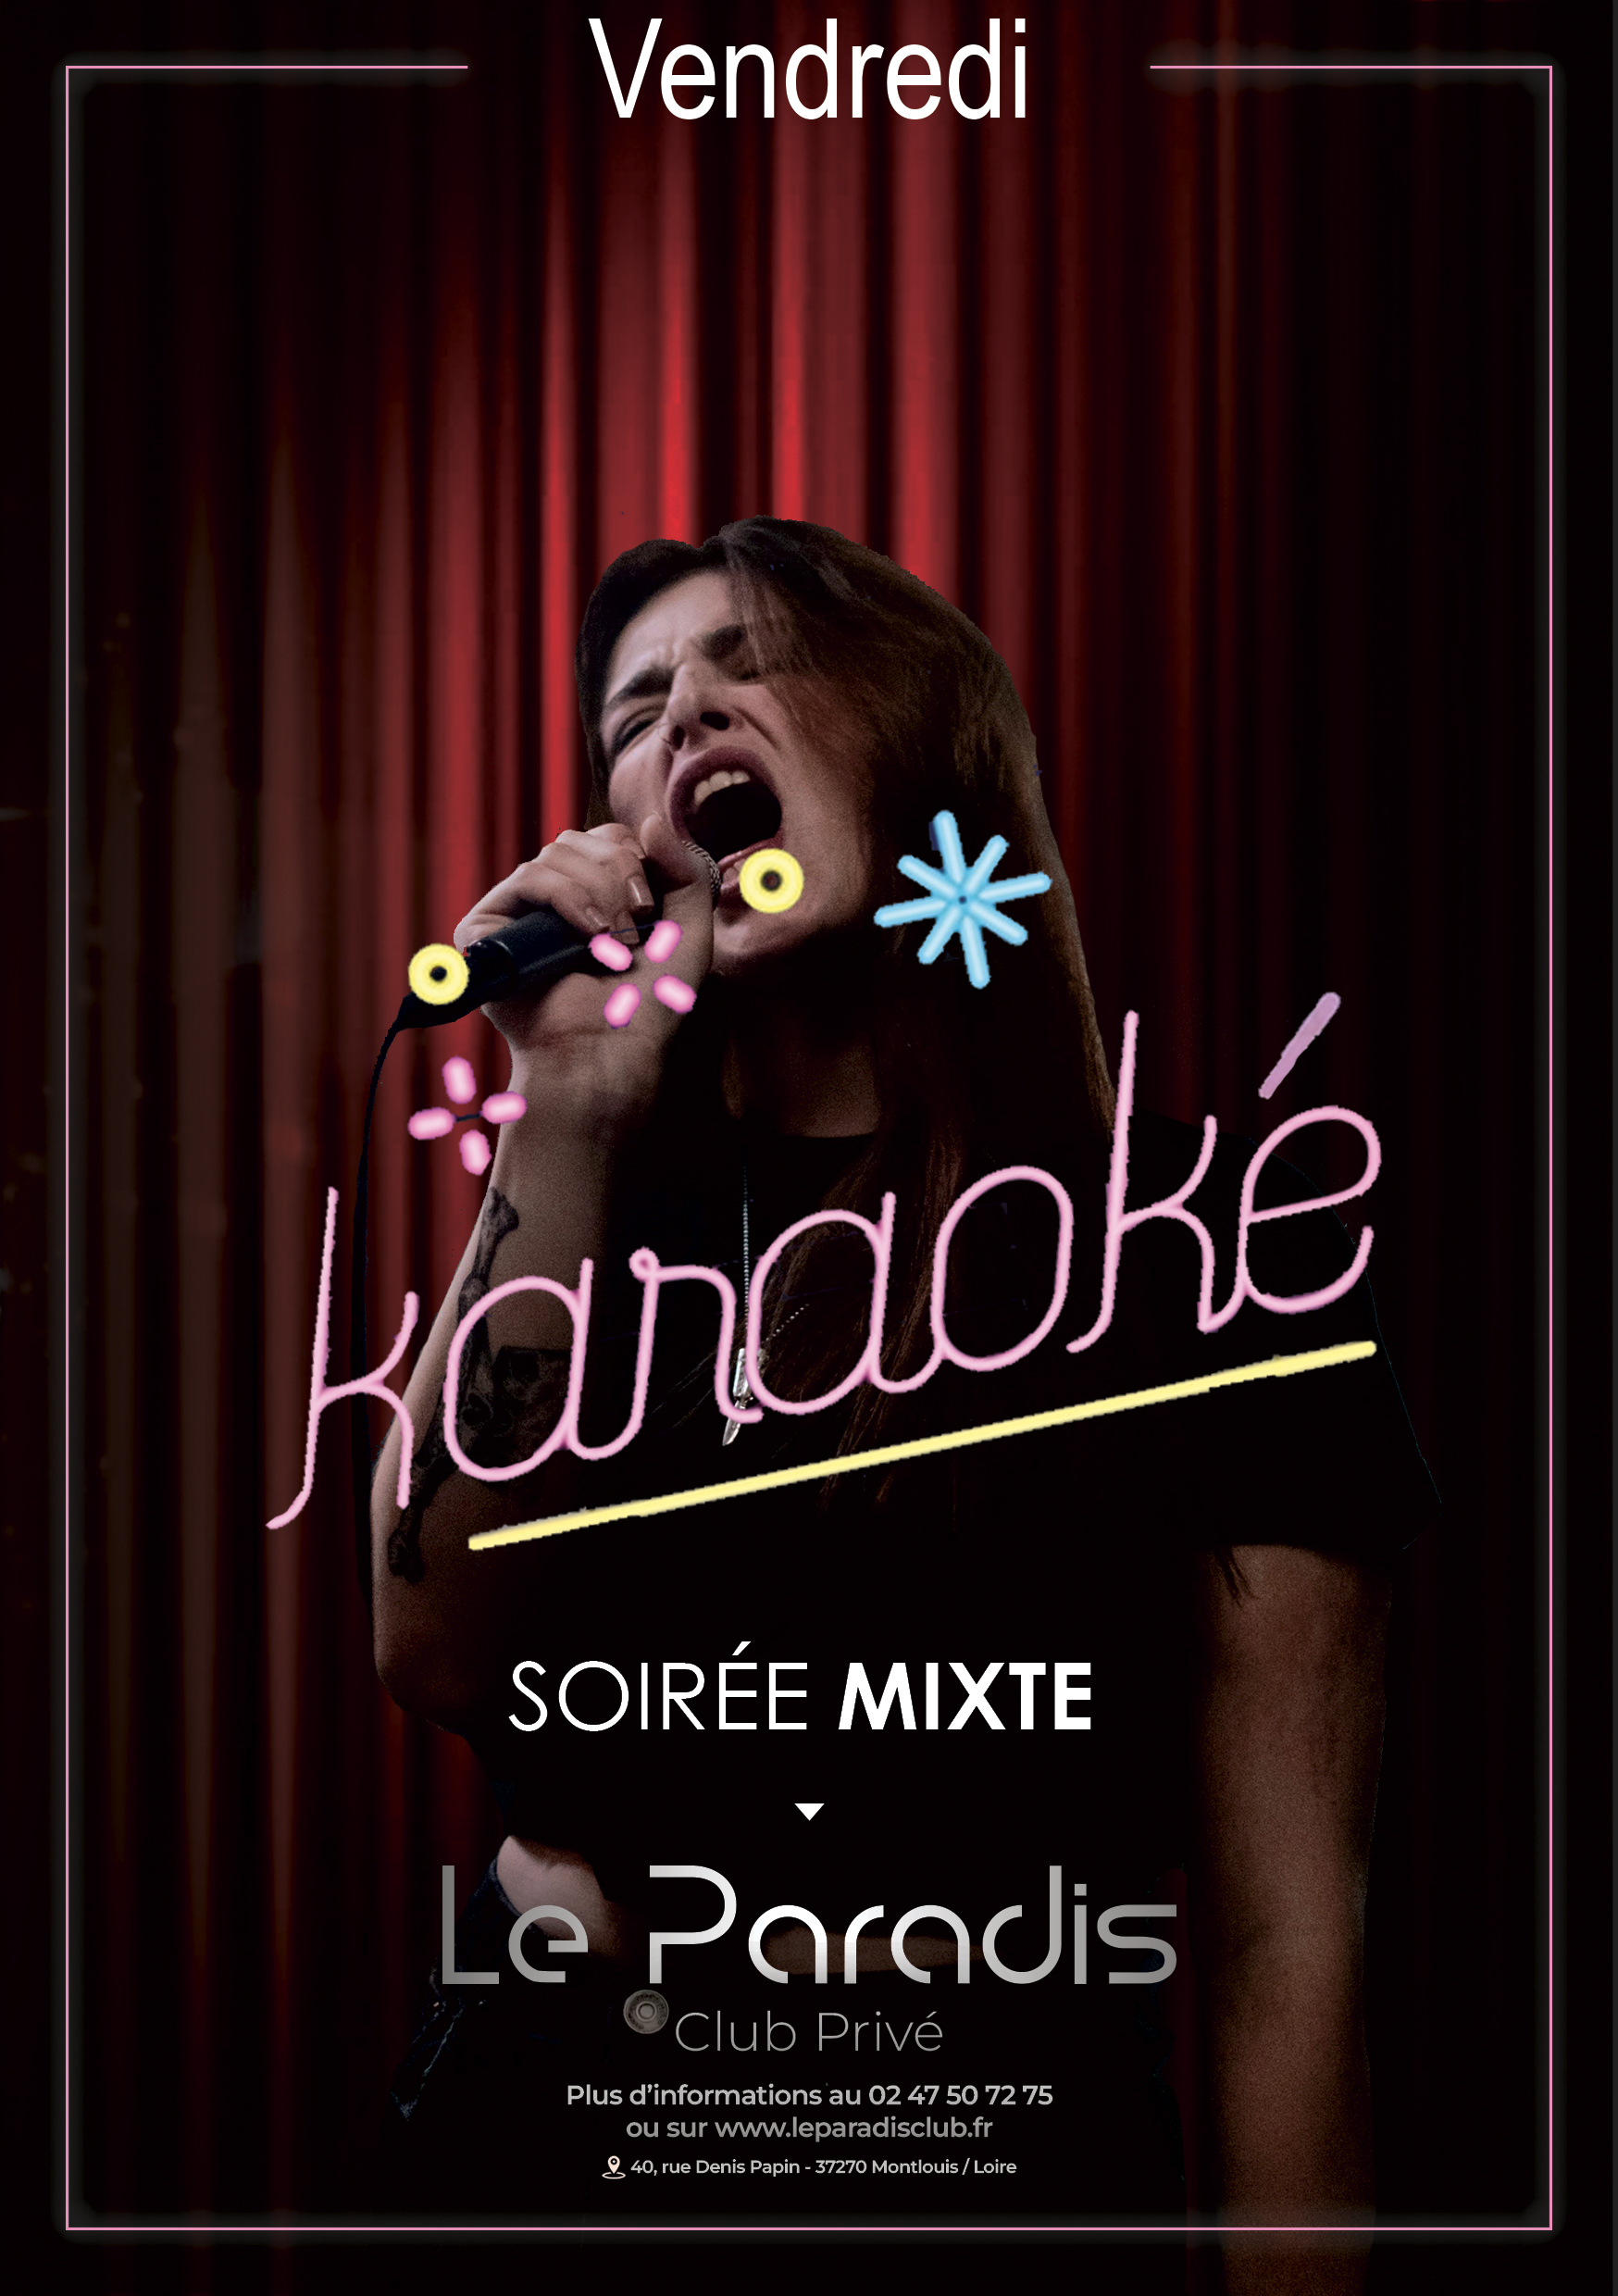 les vrrndredi karaoke 002